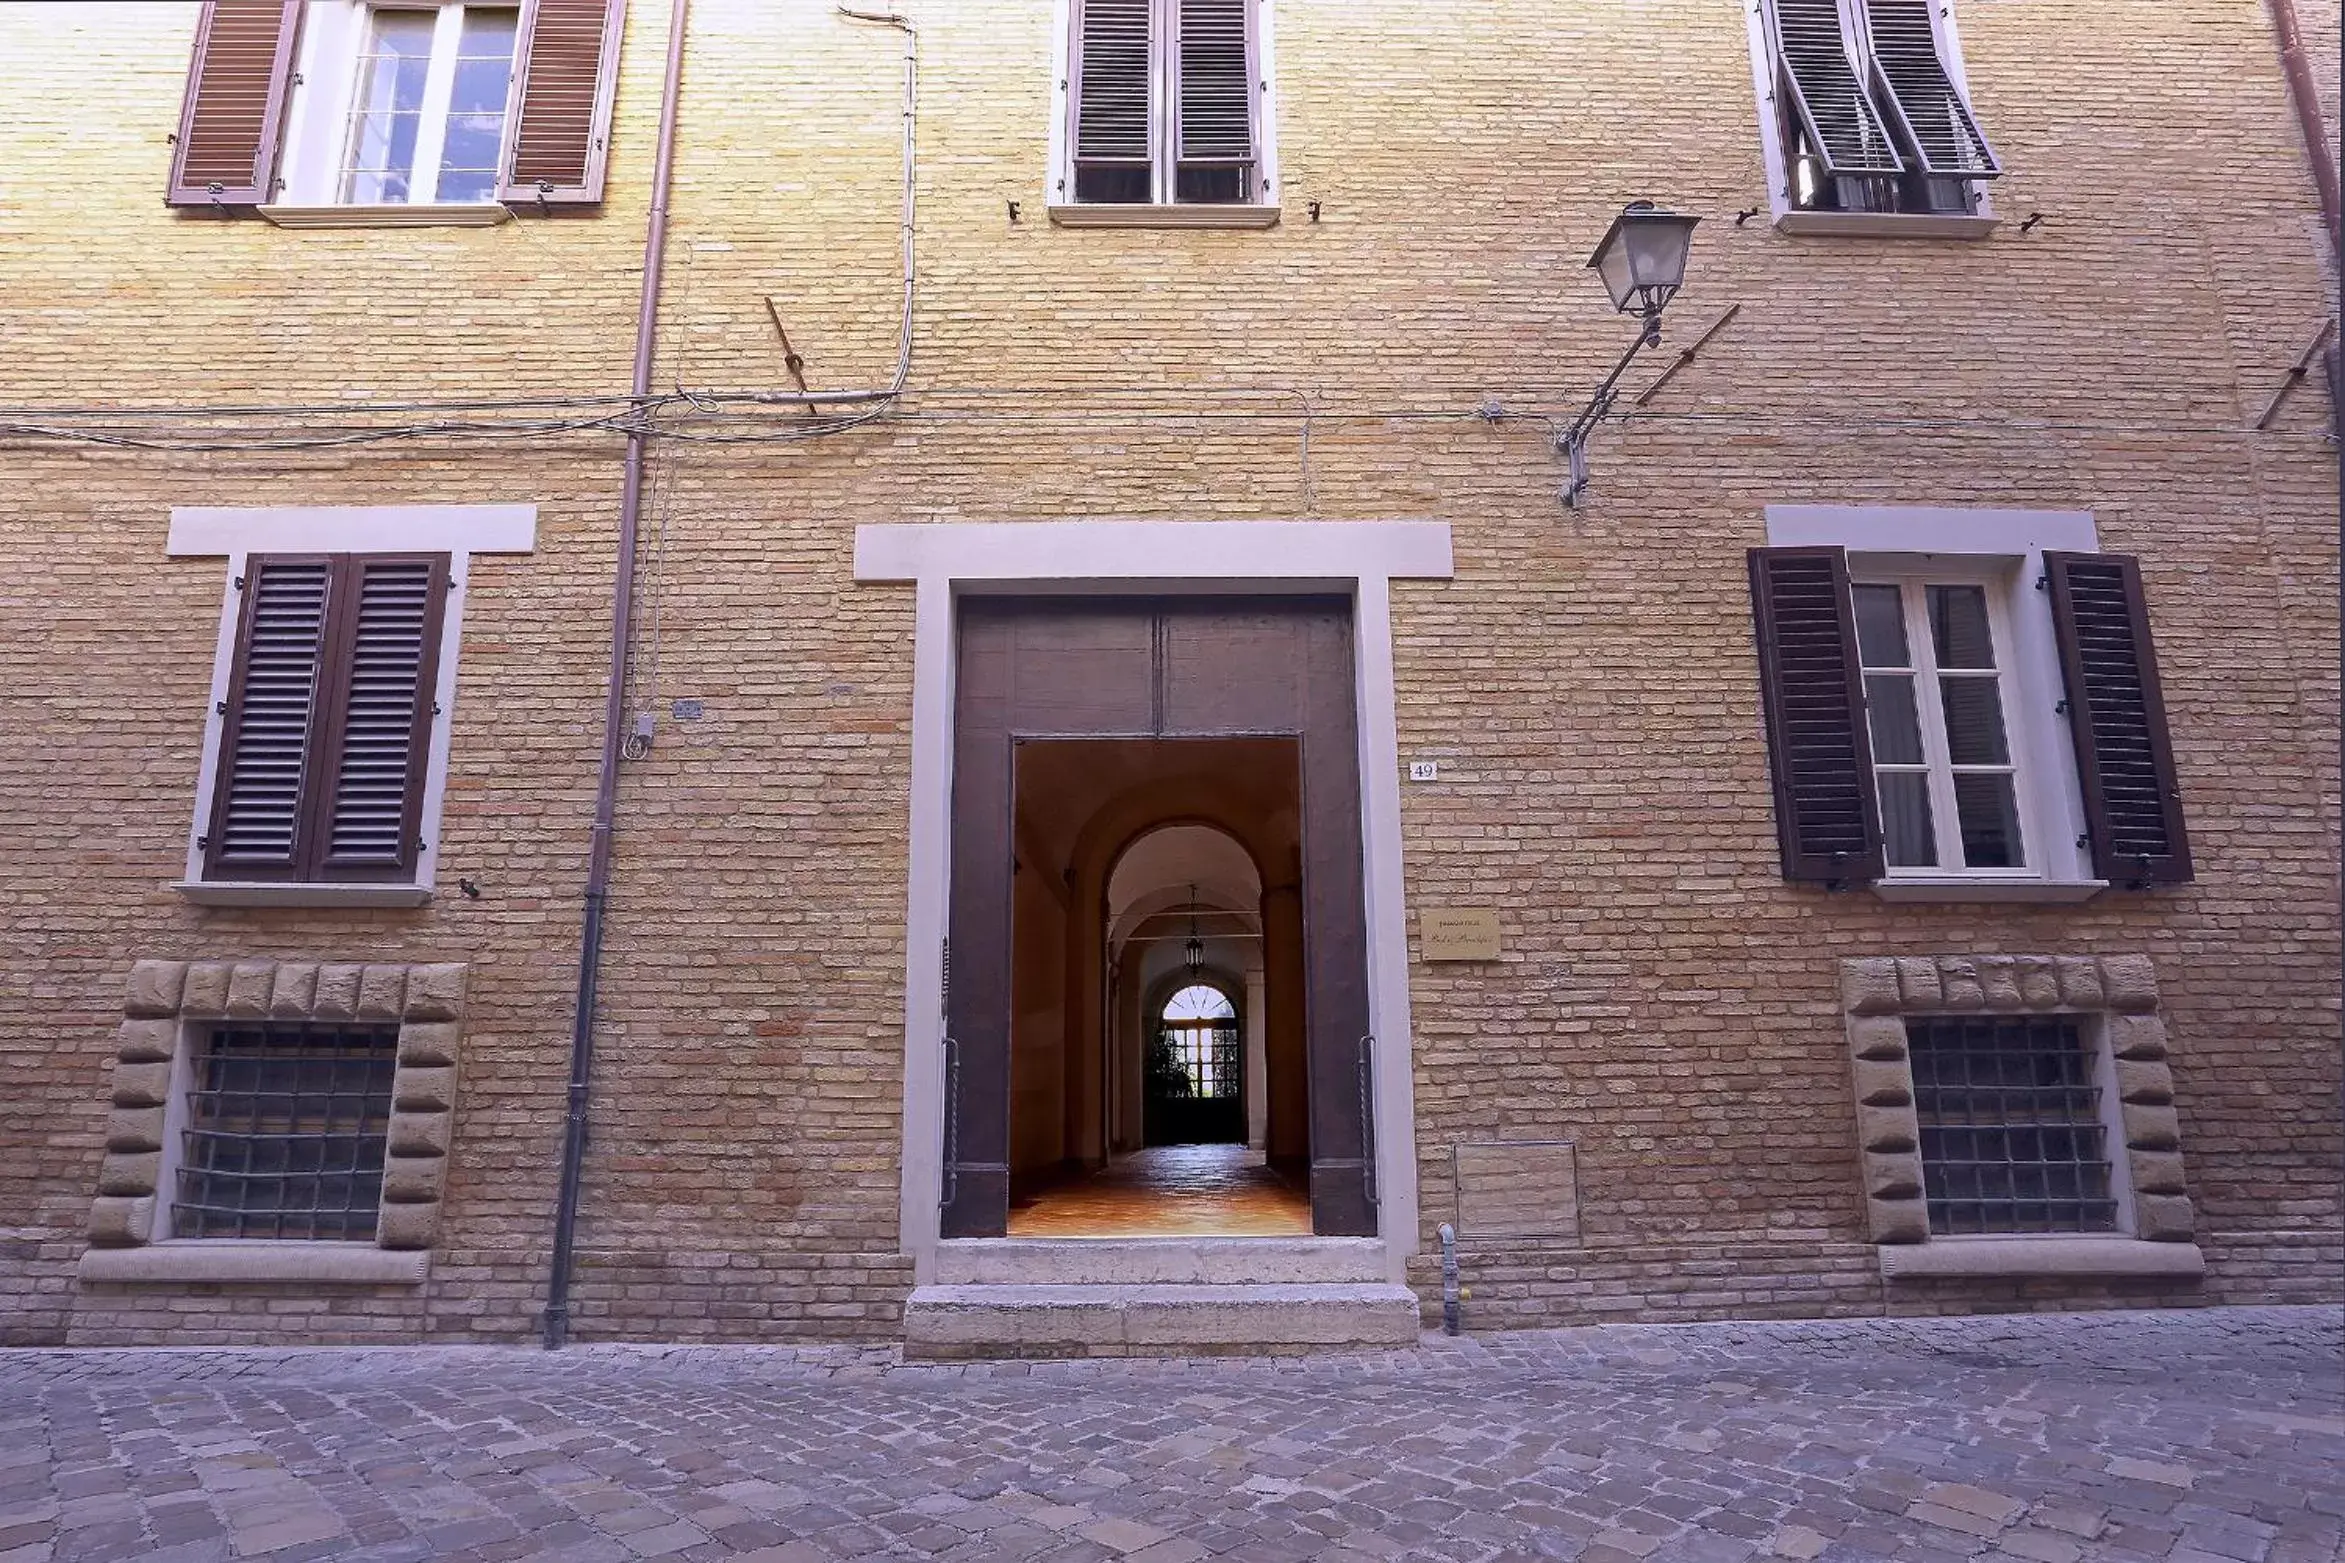 Facade/entrance in Palazzo Rotati